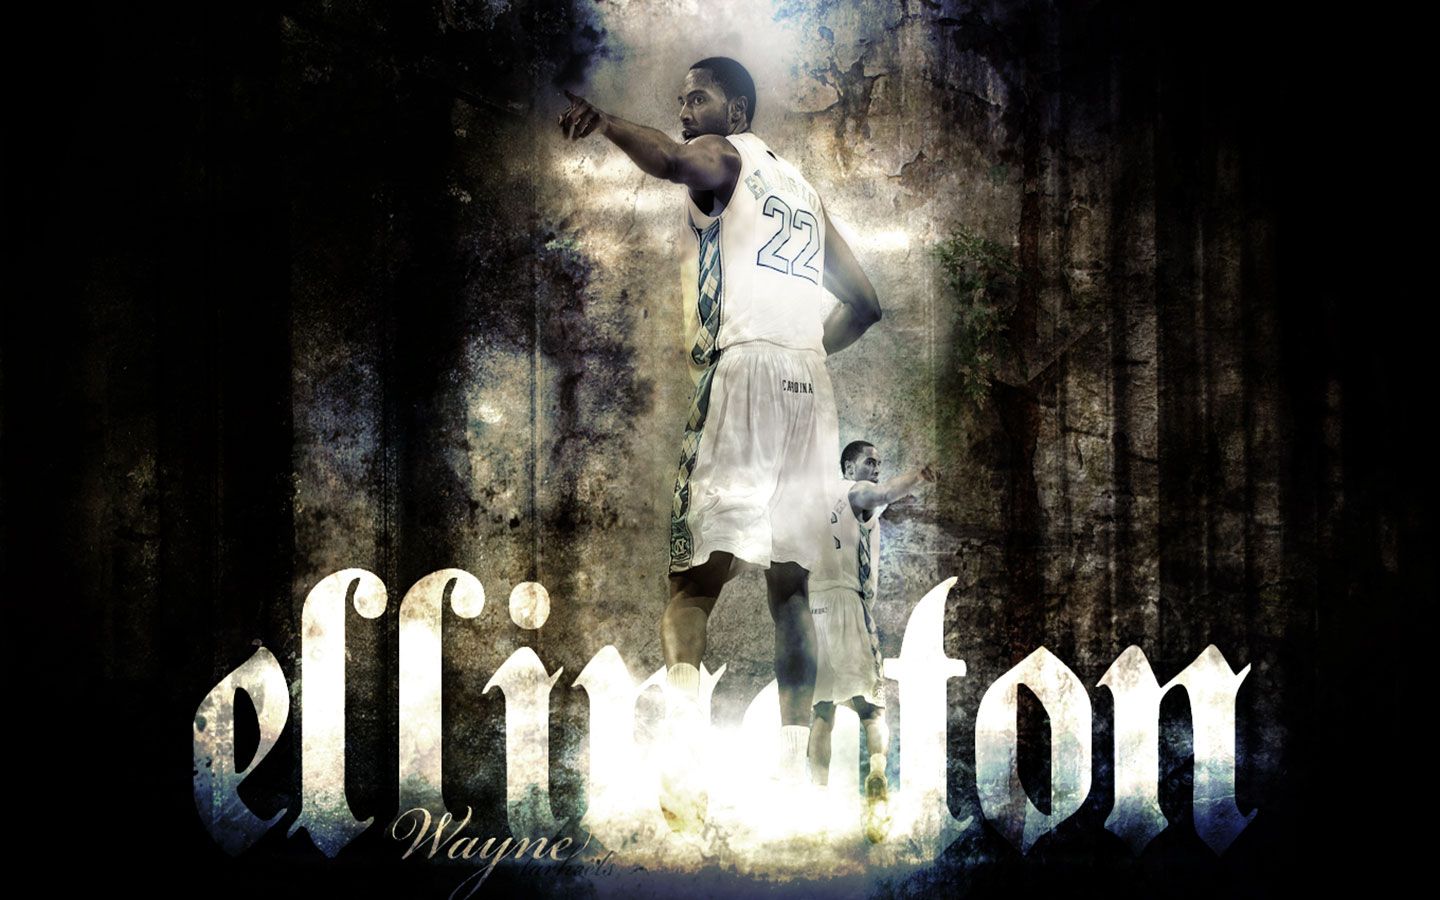 Wayne Ellington North Carolina Widescreen Wallpaper | Basketball ...